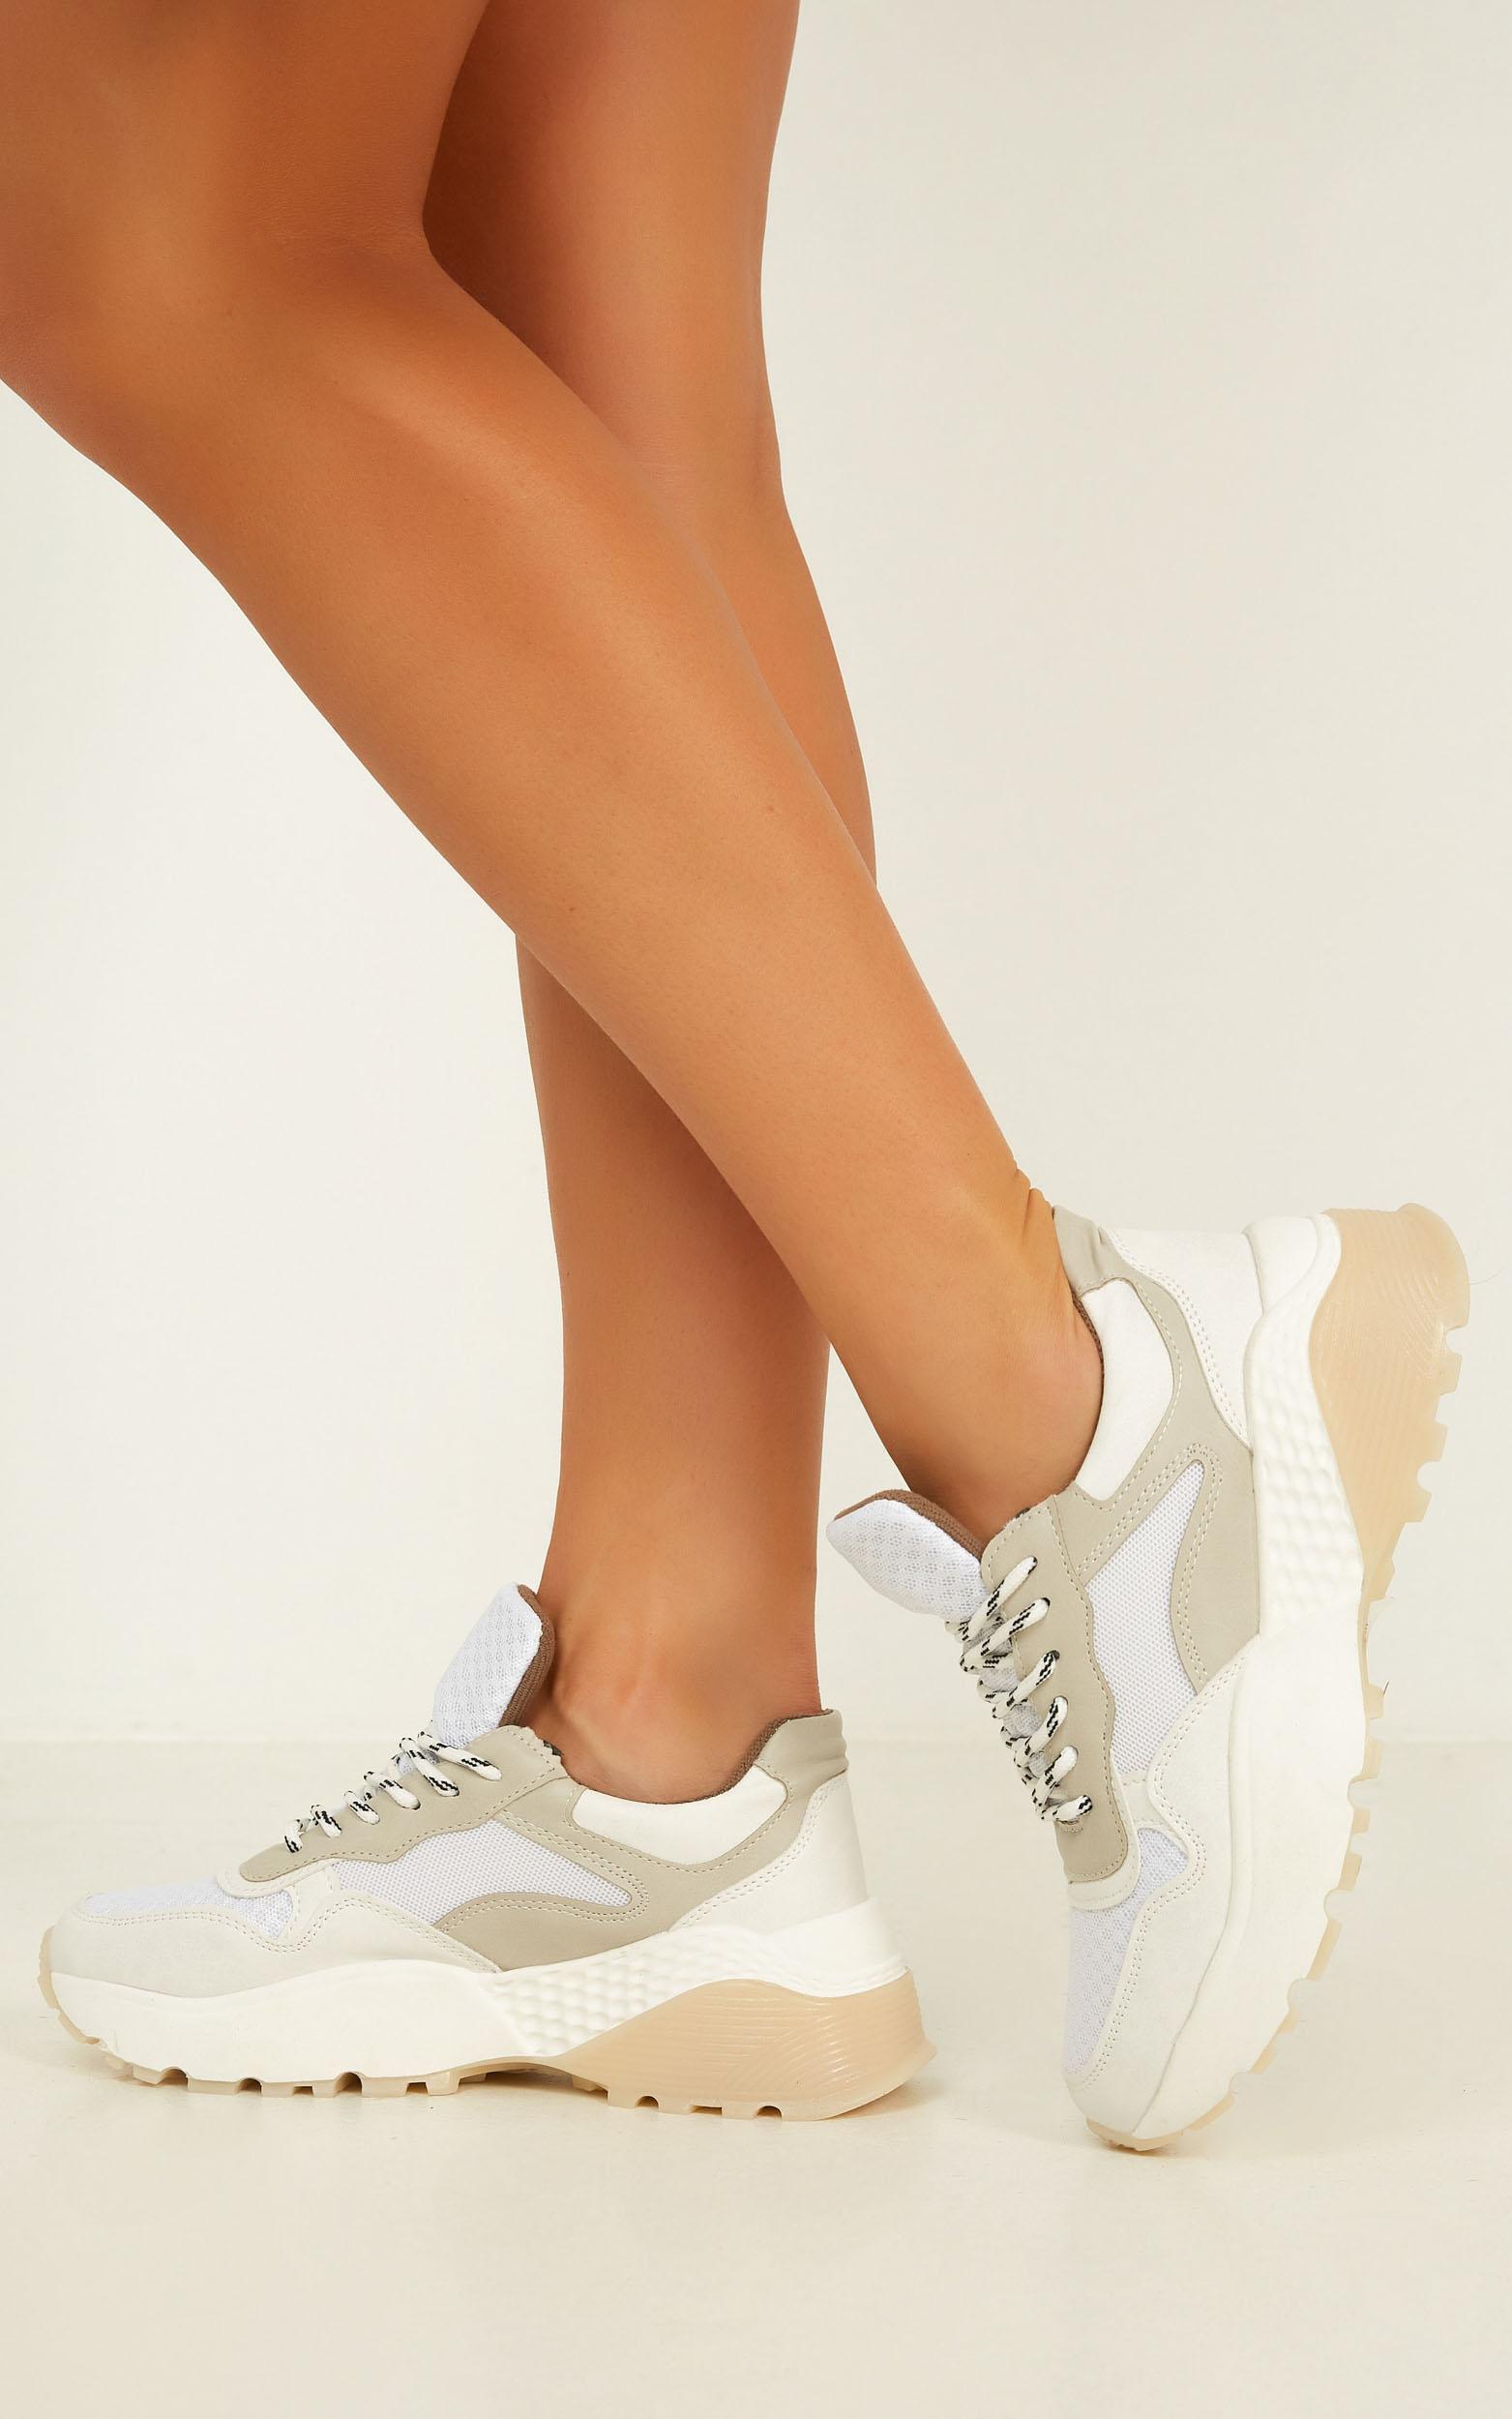 Therapy - Busta Sneakers In White | Showpo